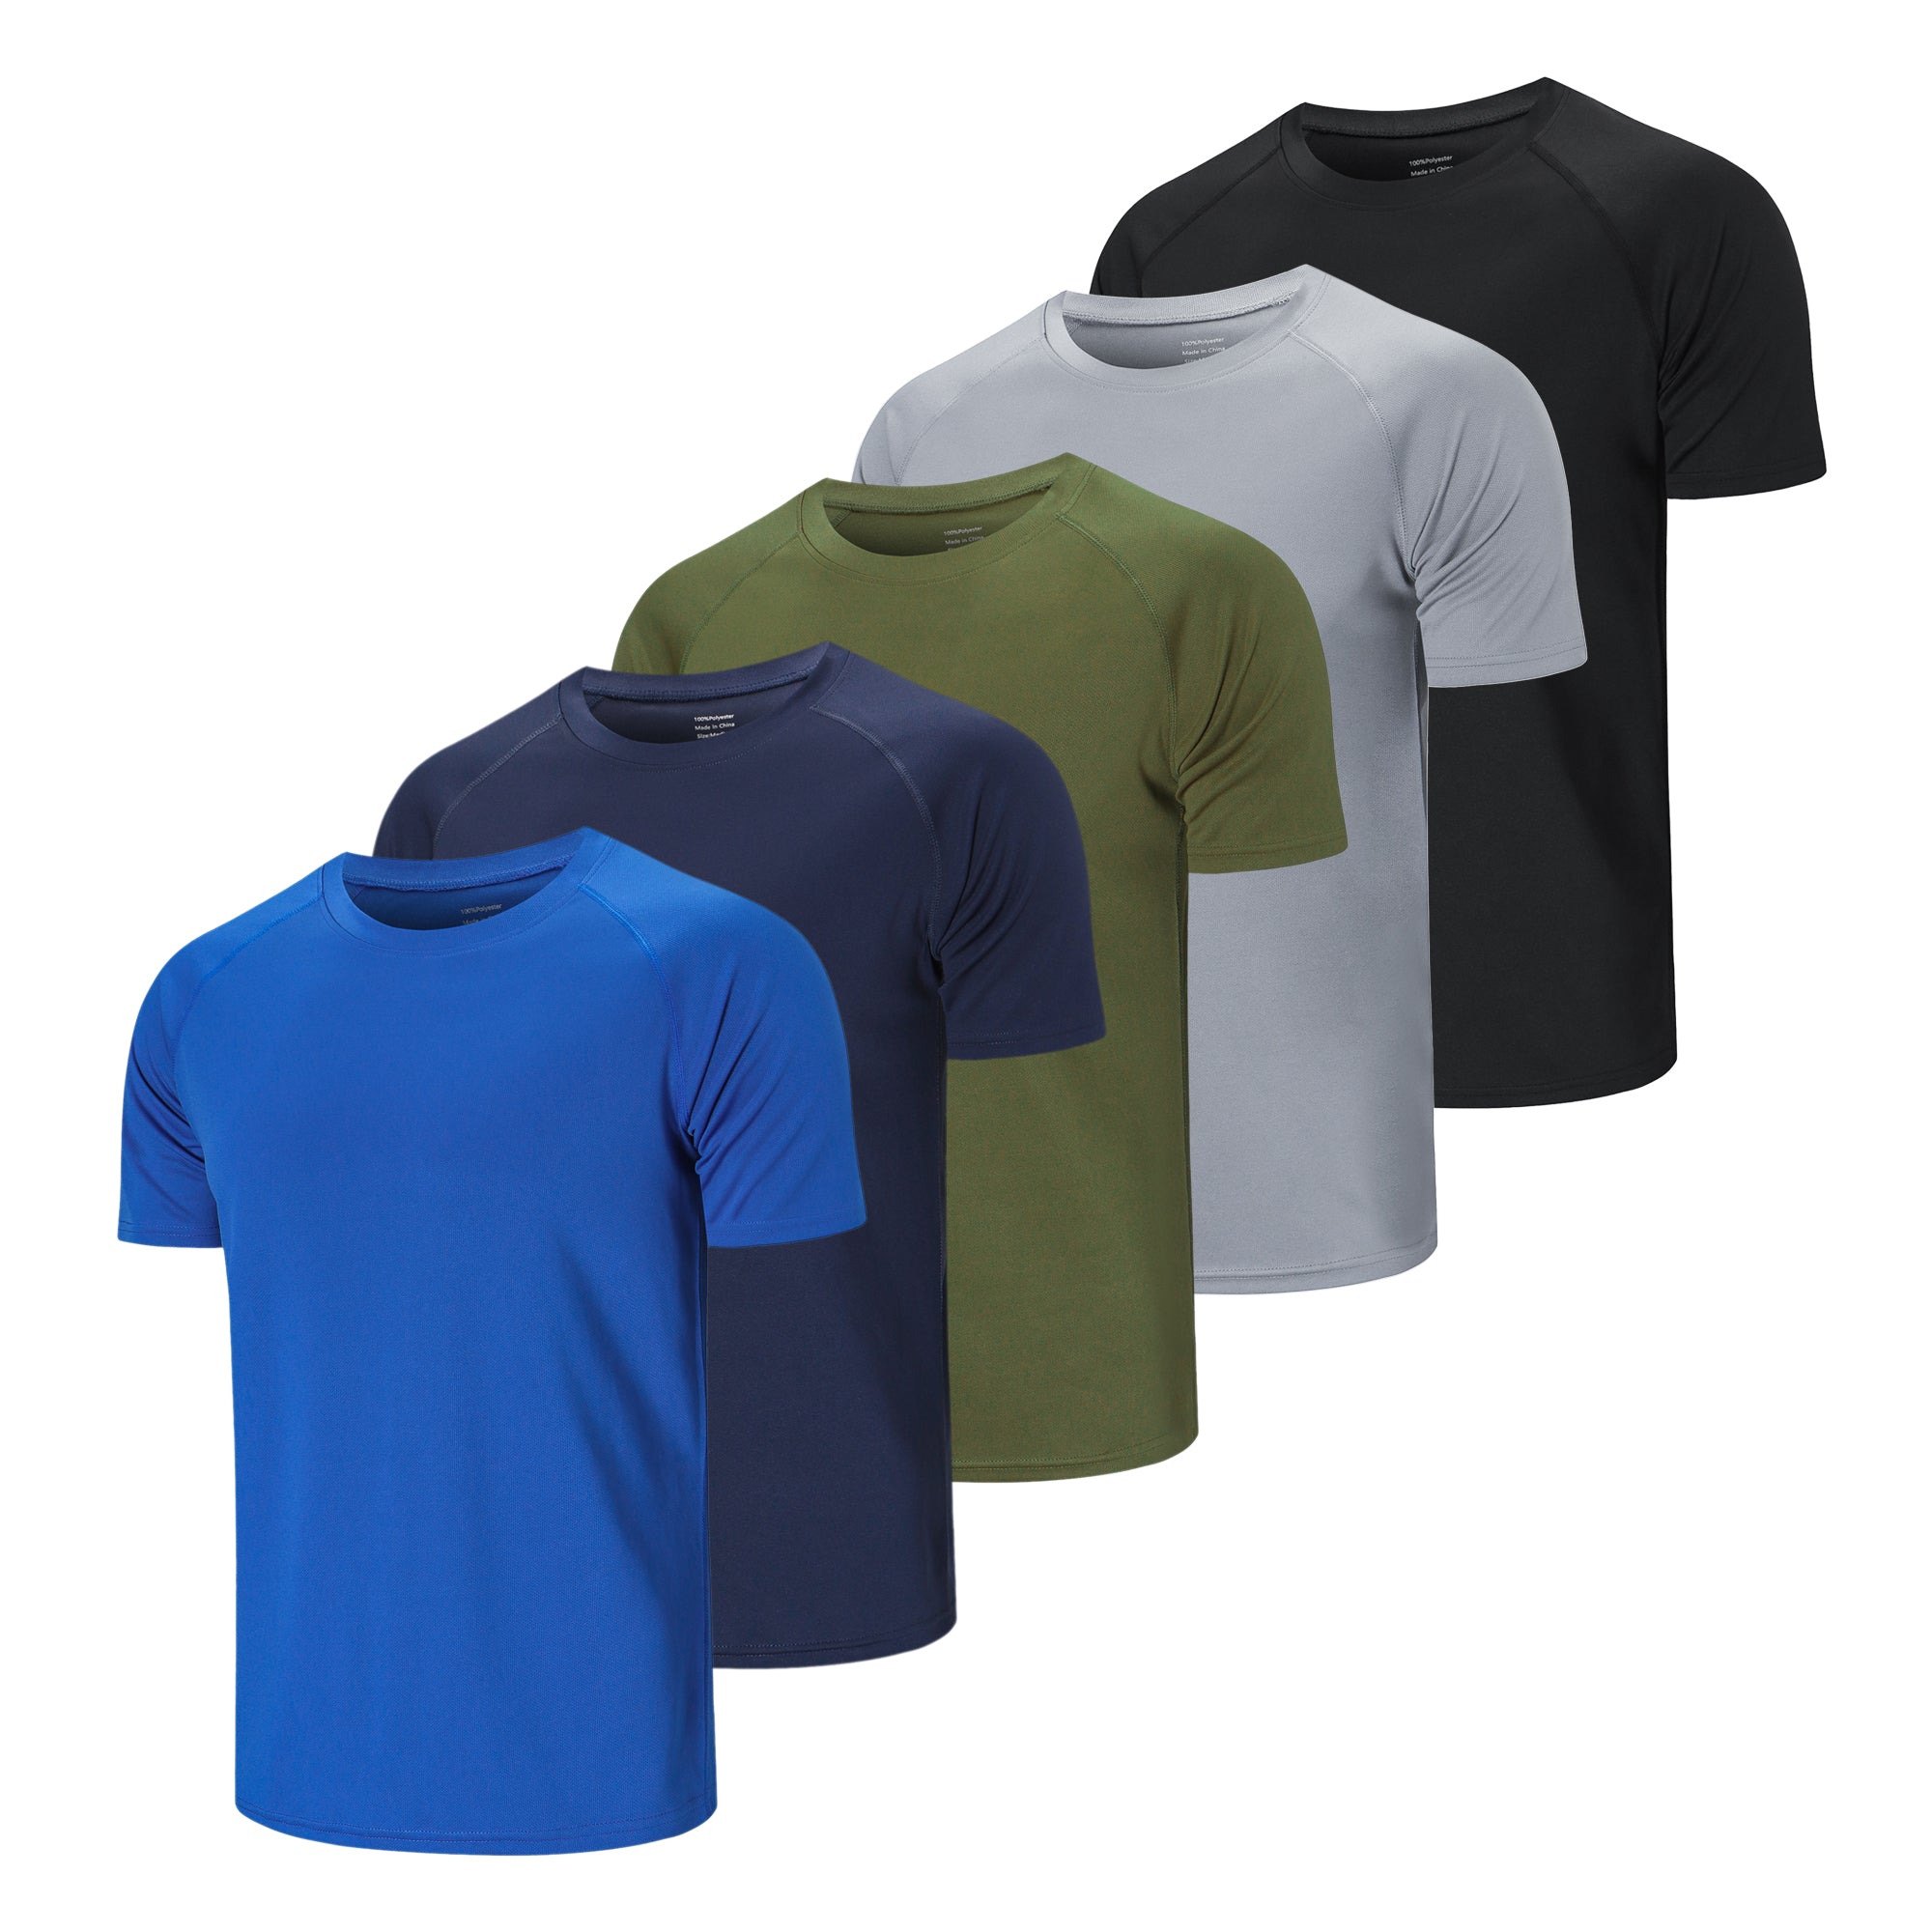 HUAKANG 3 Pack T Shirts Men Breathable Sport Shirts Cool Dry